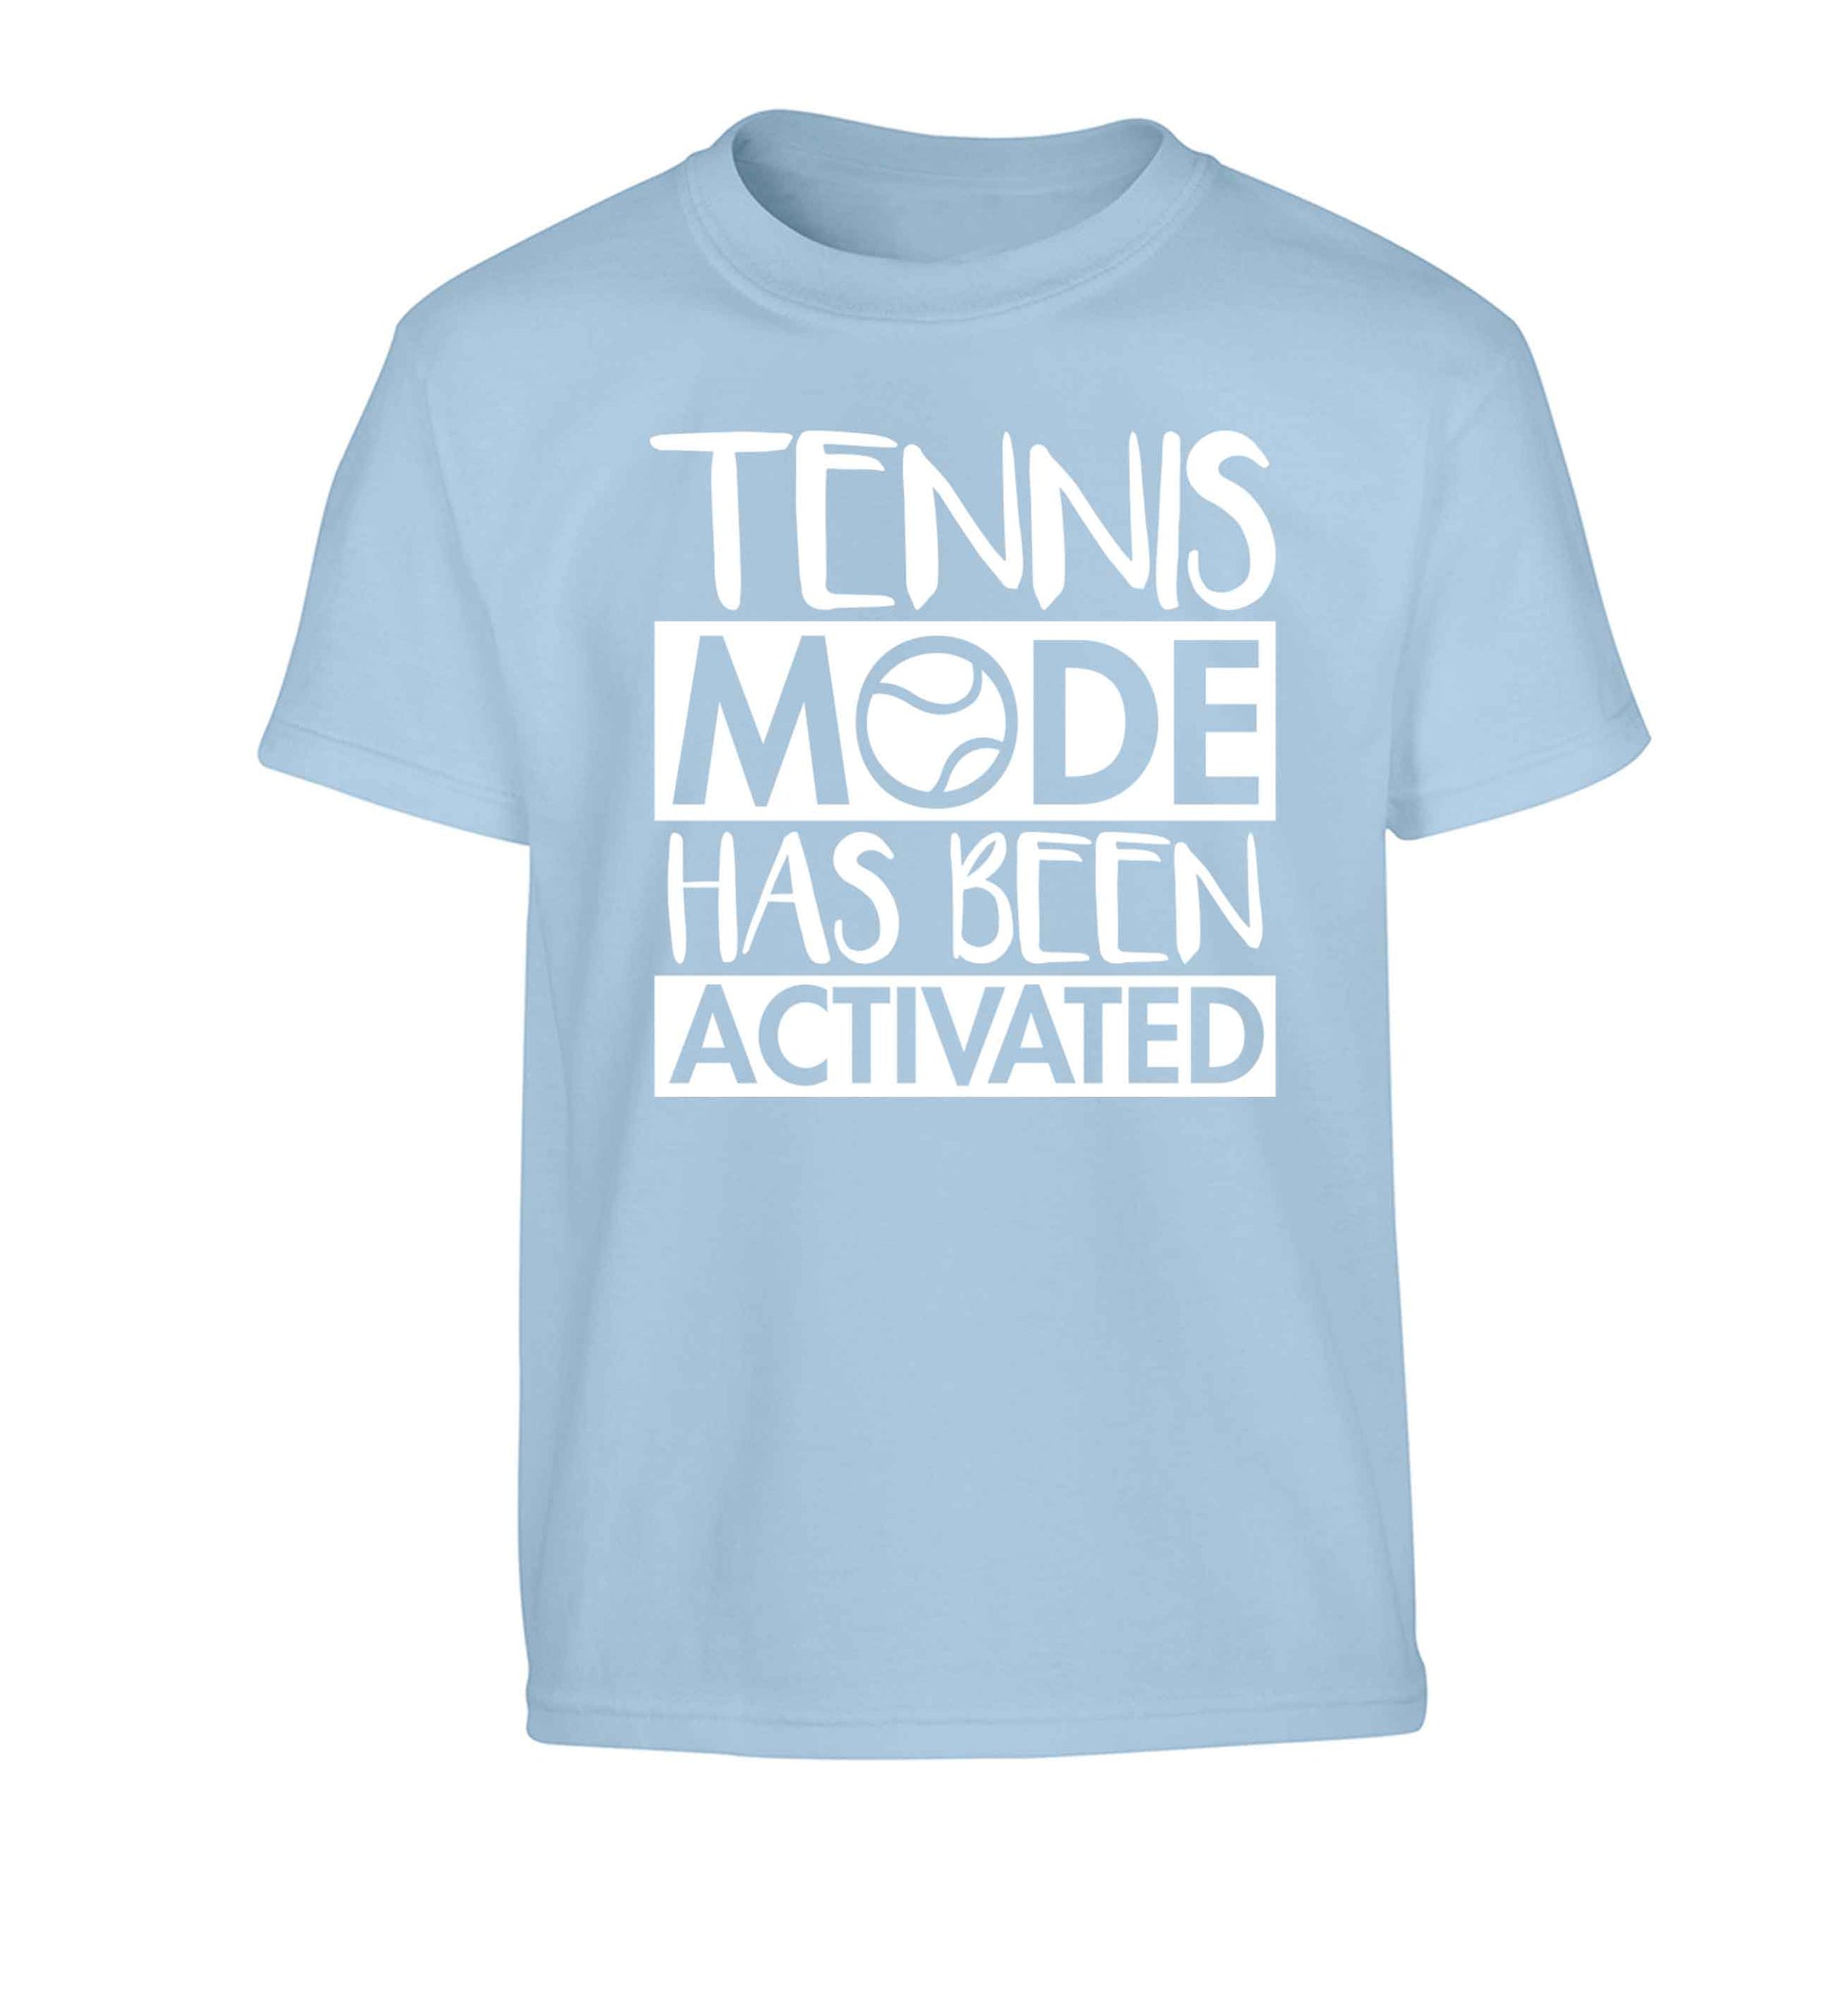 Tennis mode has been activated Children's light blue Tshirt 12-13 Years